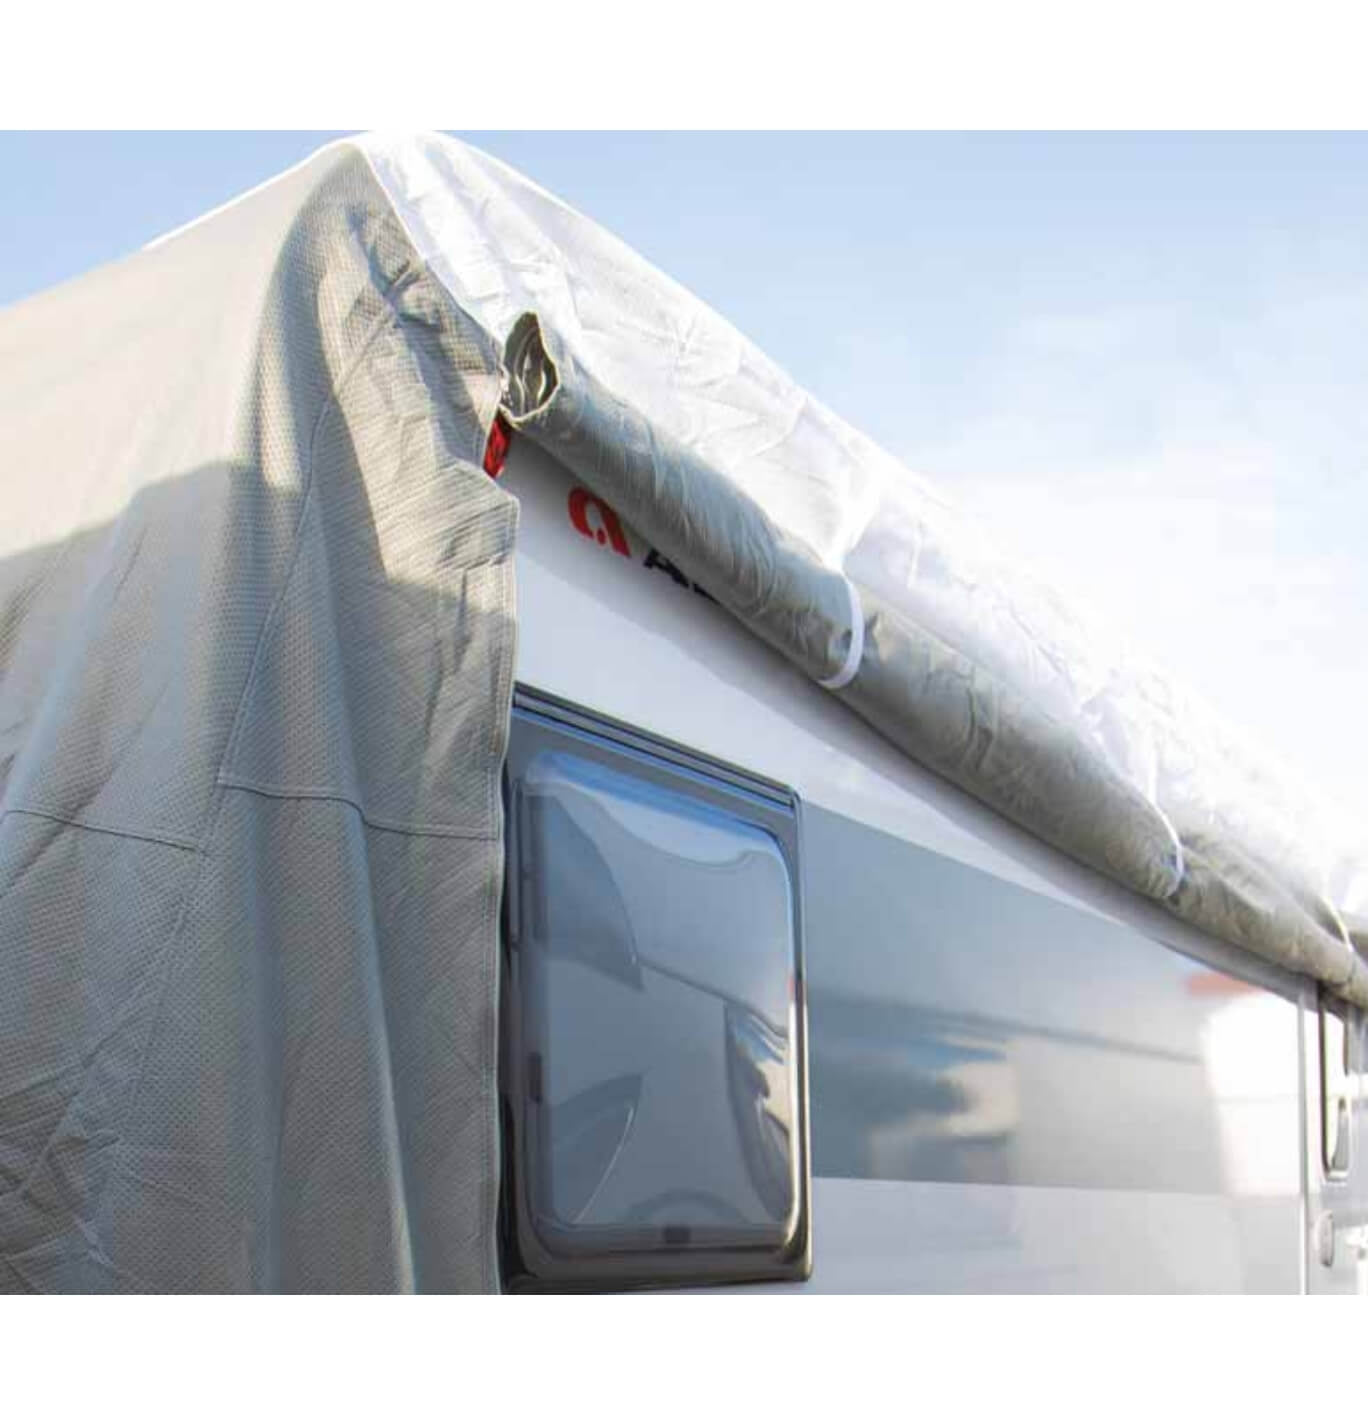 Reimo Premium Breathable Caravan Cover | 580-640cm x 230cm